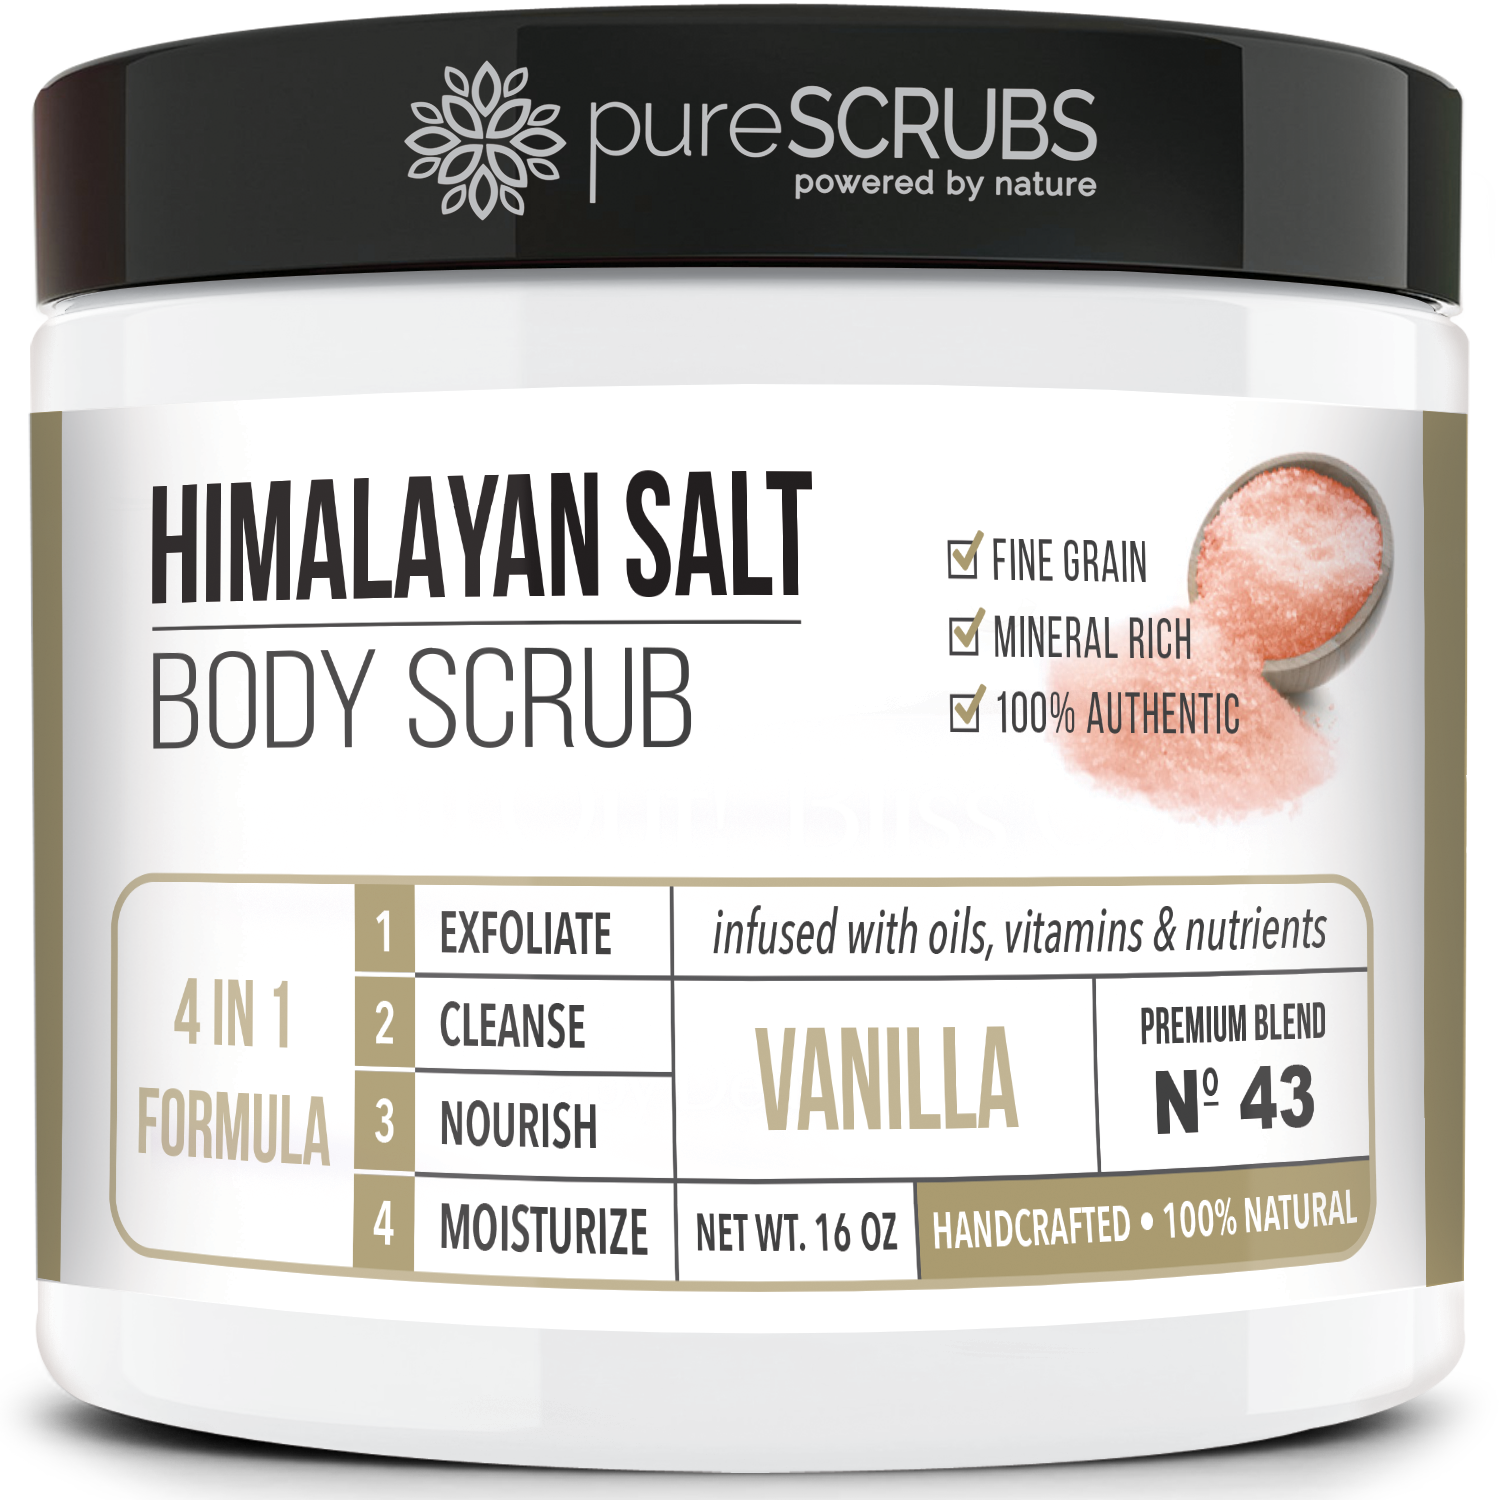 Vanilla Body Scrub / Pink Himalayan Salt / Premium Blend #43